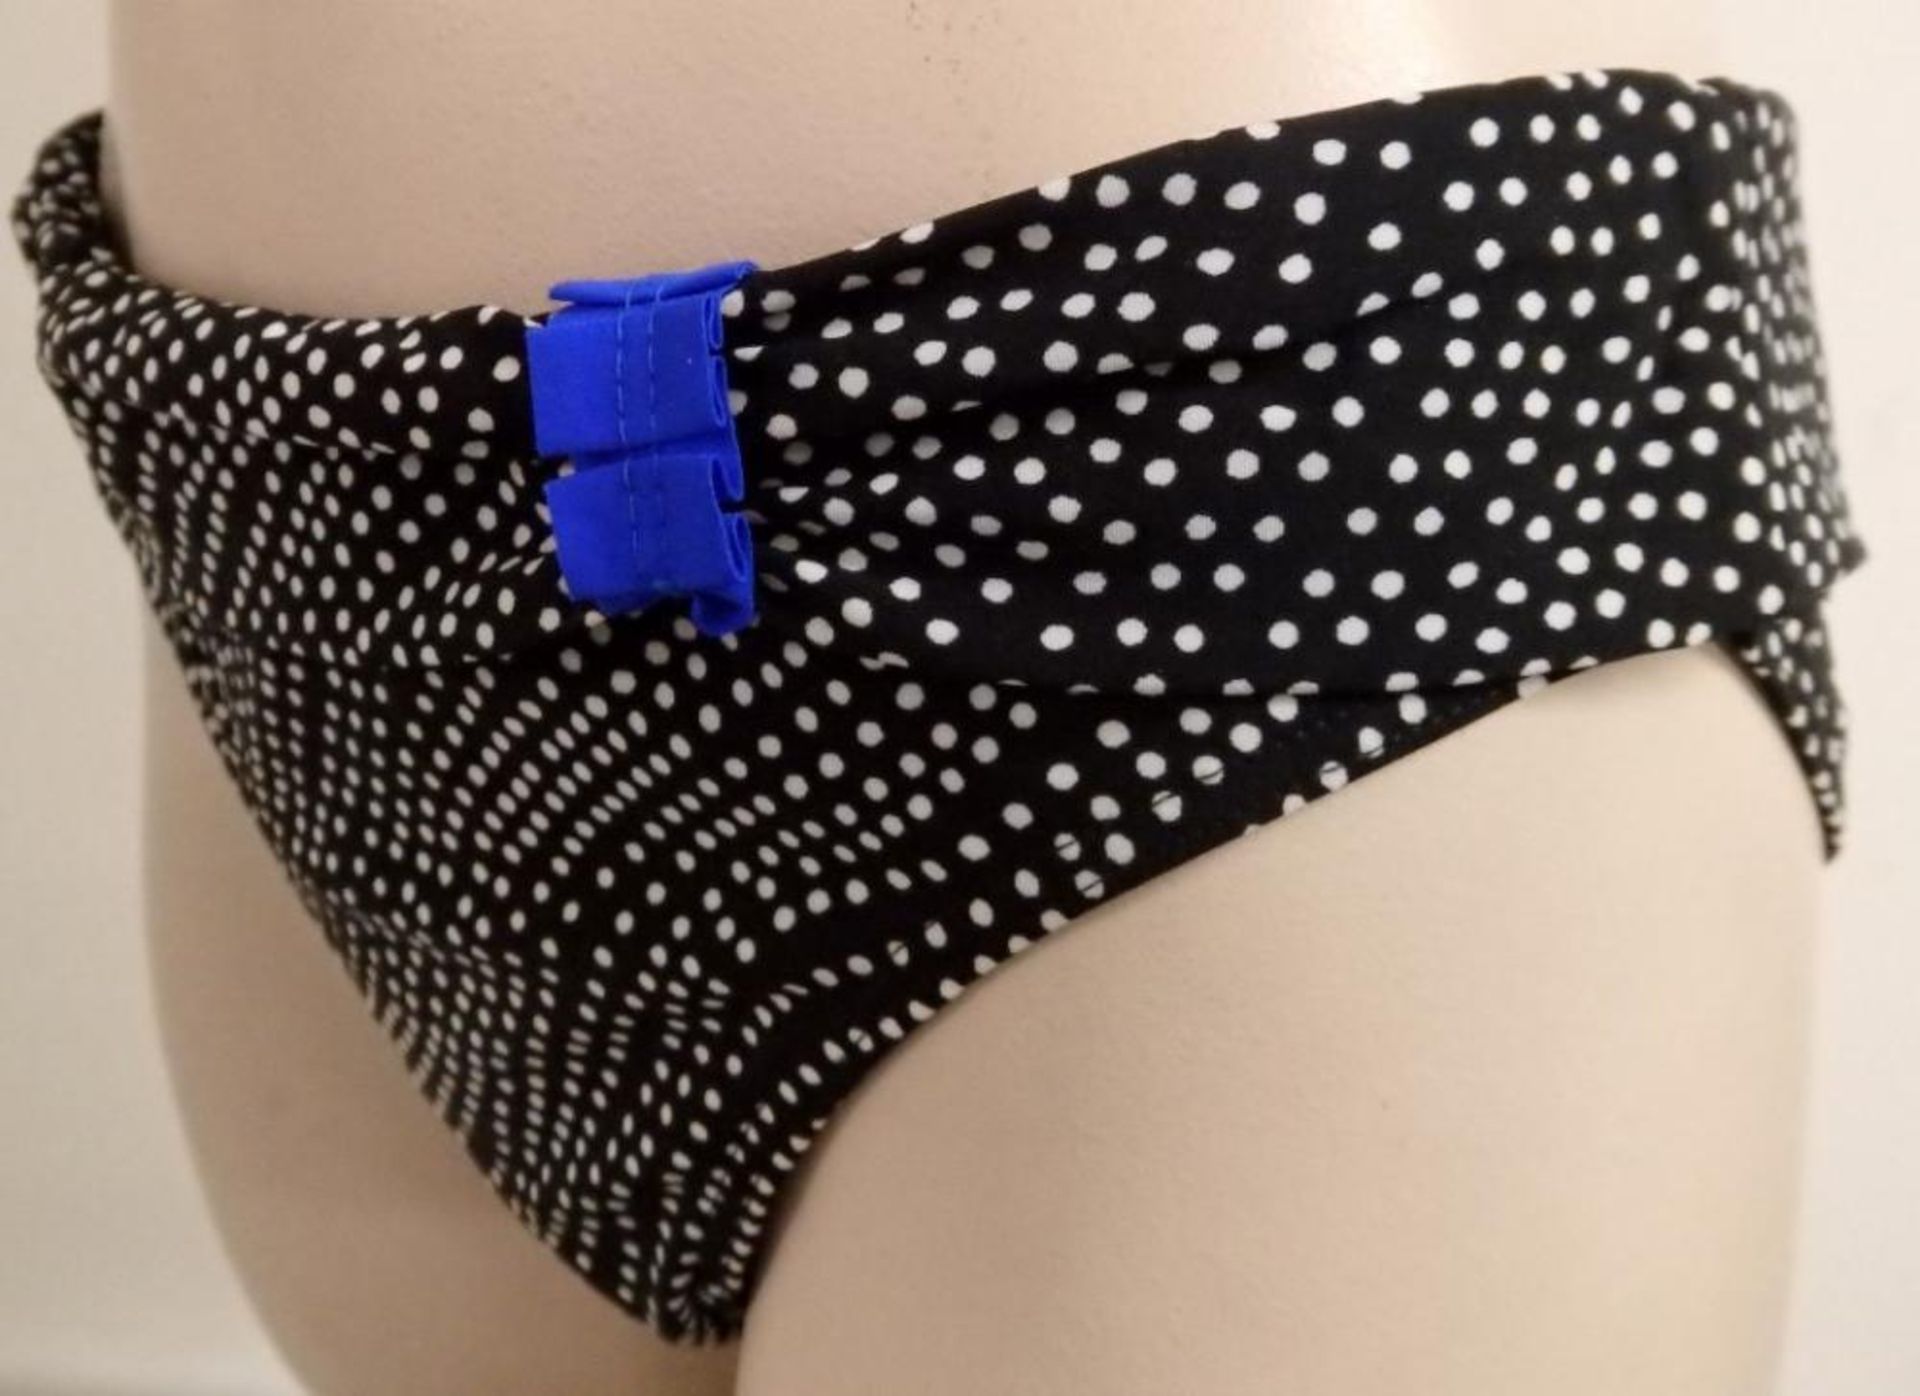 1 x Rasurel - Black Polka dot with royal blue trim &frill Tobago Bikini - B21068 - Size 2C - UK 32 - - Image 7 of 10